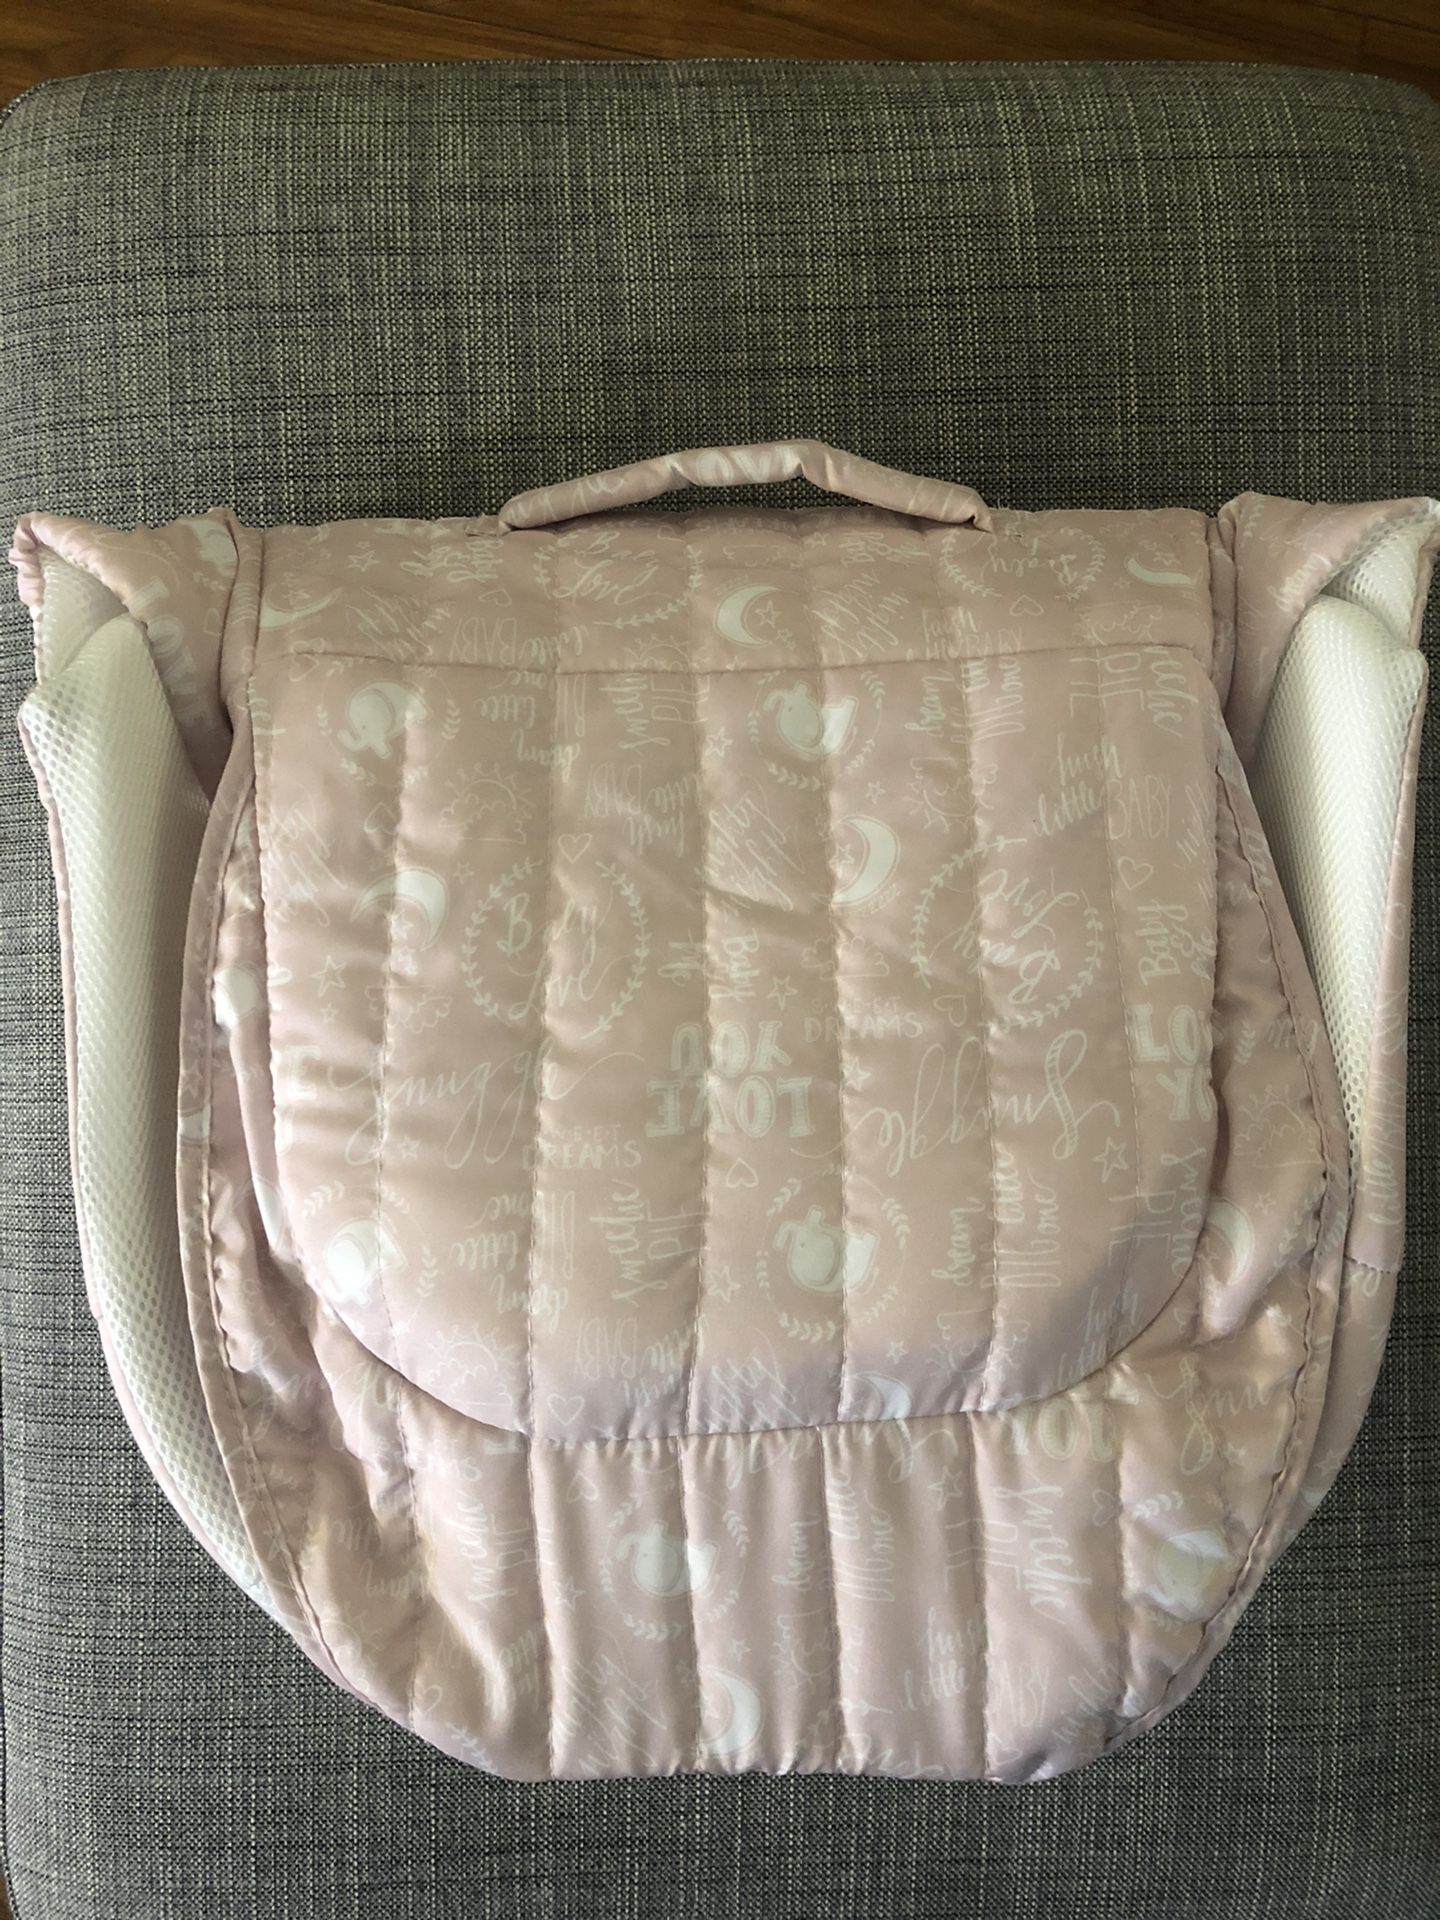 Baby Delight® Snuggle Nest™ Harmony Portable Infant Sleeper